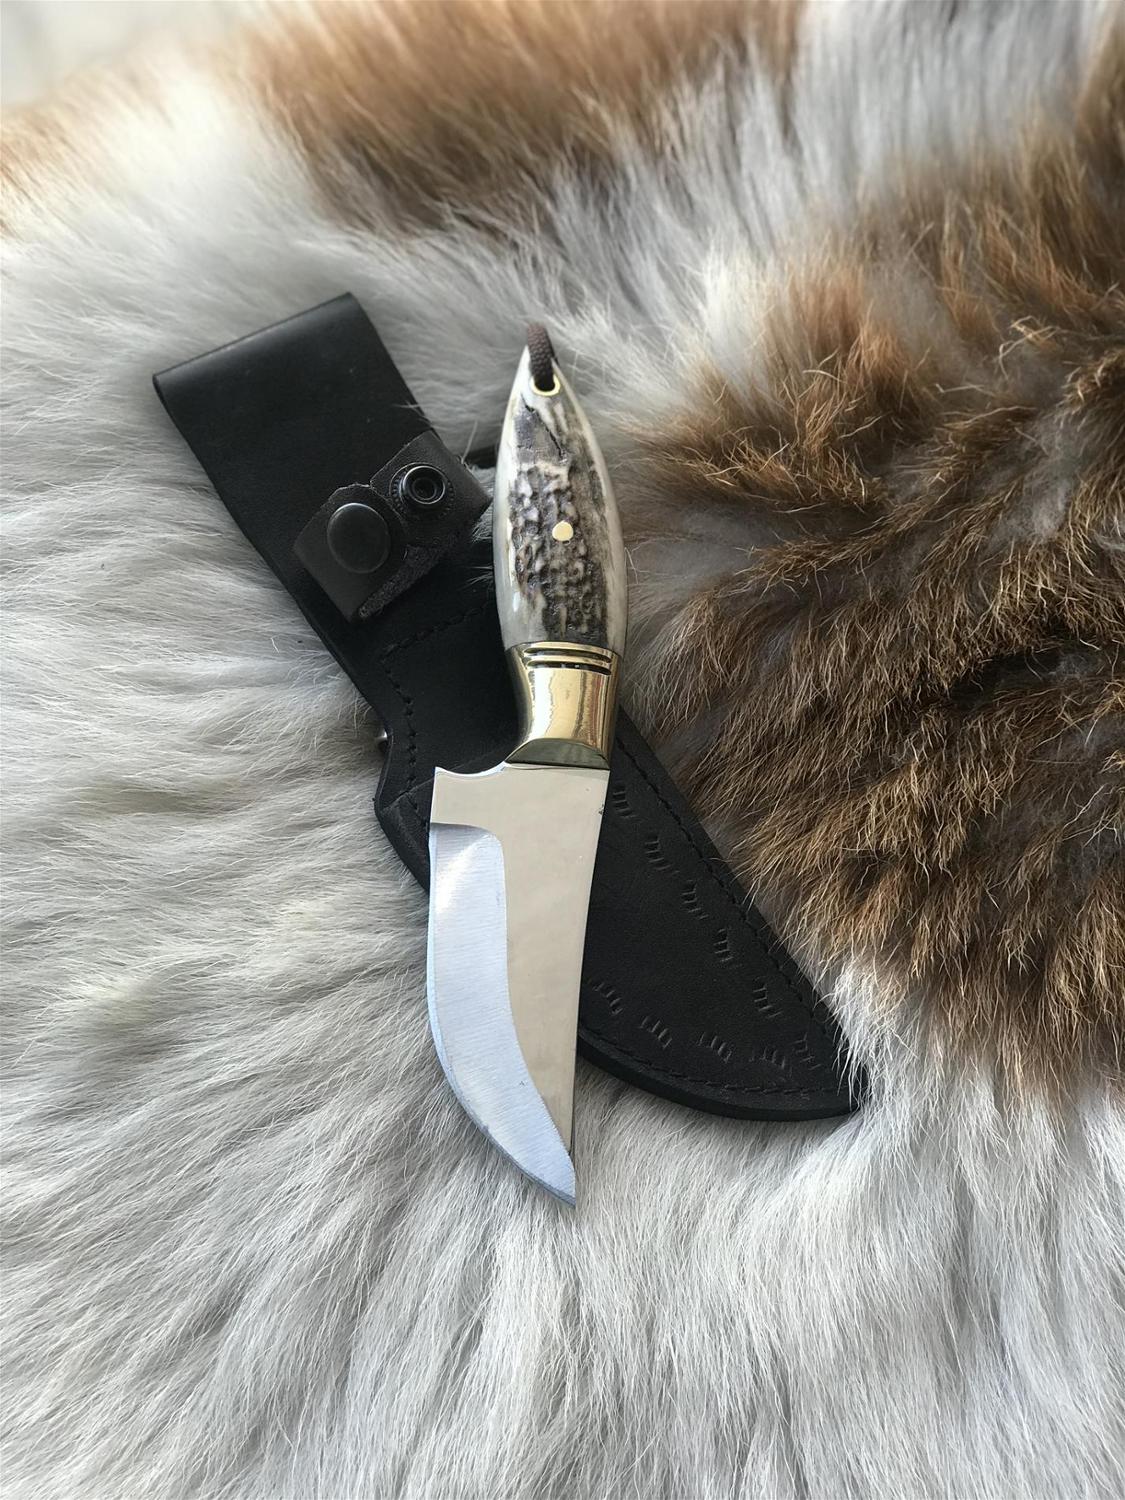 Handmade Deer Horn Mini Camping Knife with Leather Sheath Axe Katana Охотник Нож Hunter Hunting Blade Knives Kukri KNM-0285